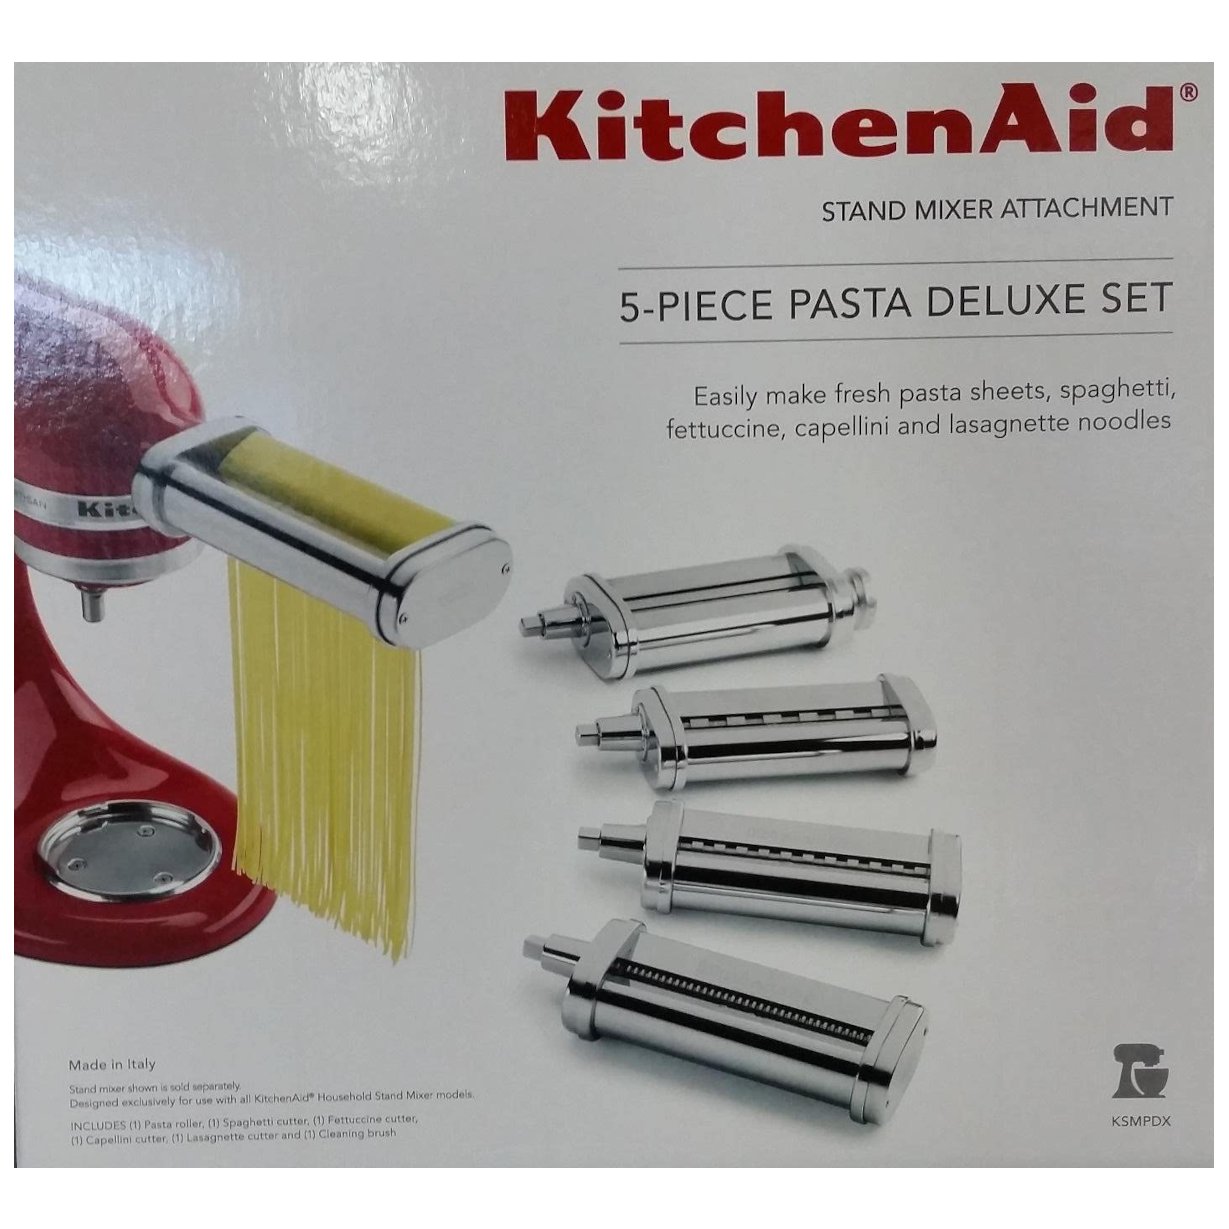 KitchenAid® 5-PIECE PASTA DELUXE SET ATTACHMENT